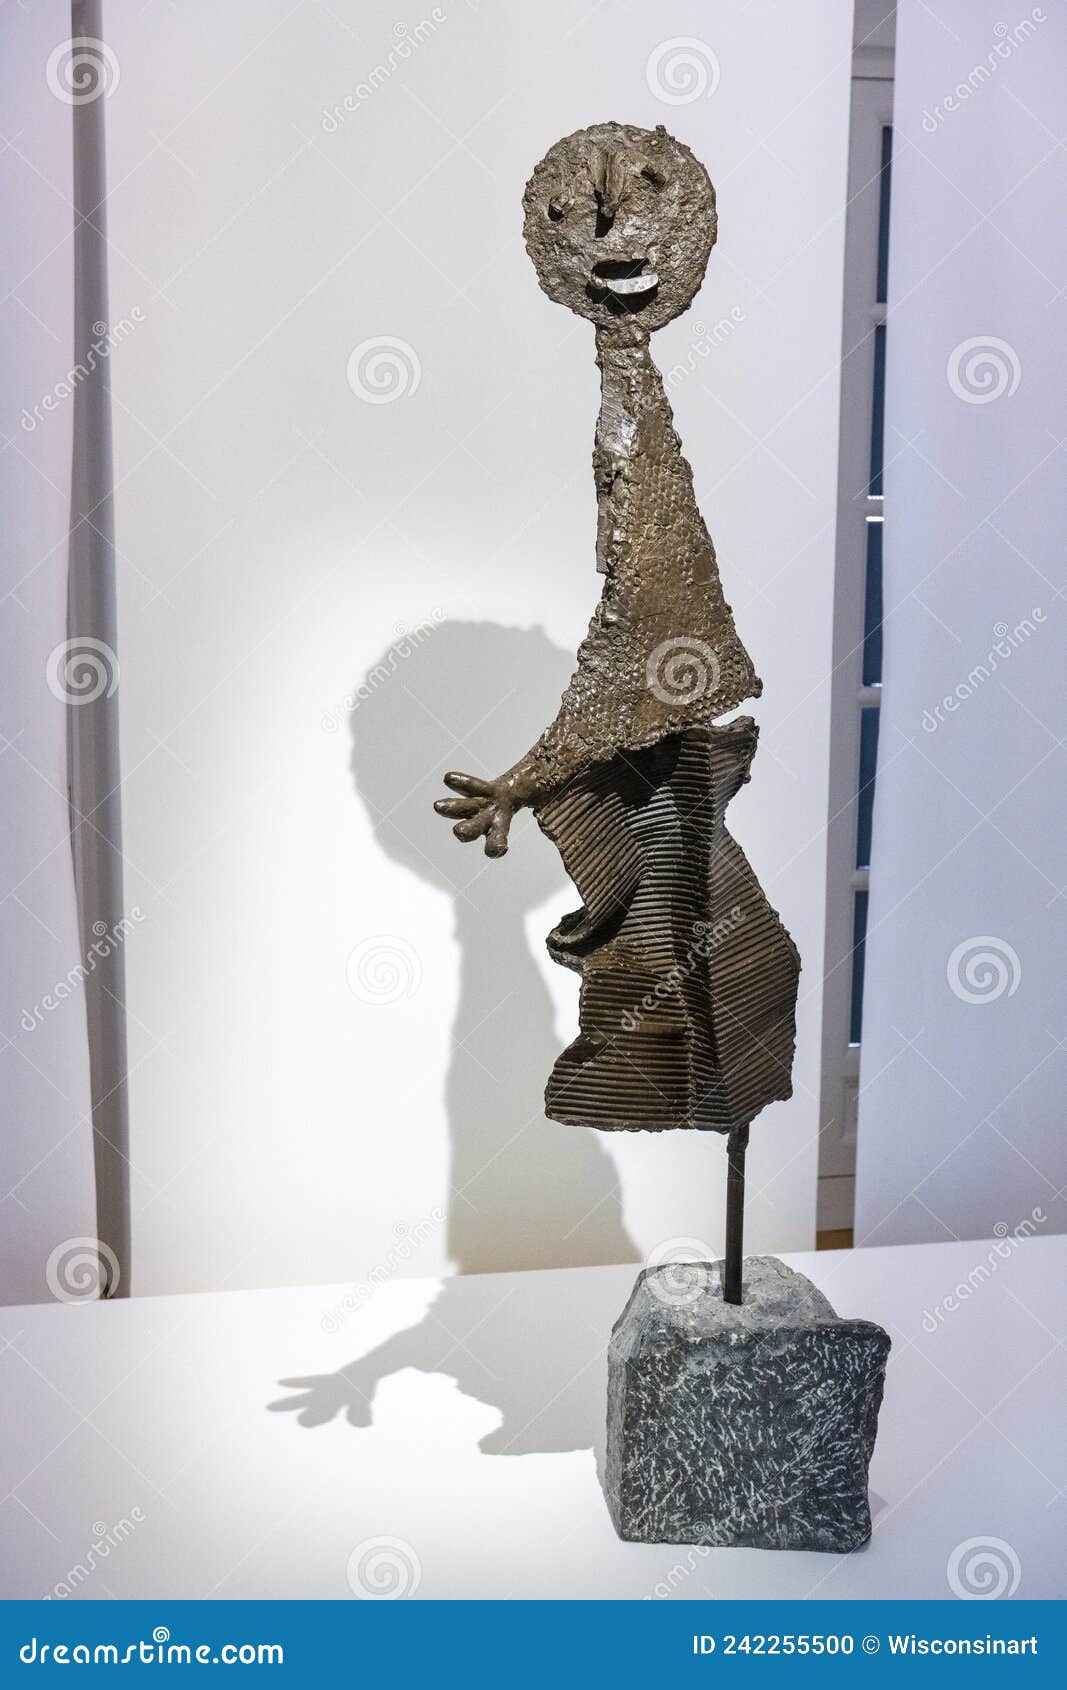 https://thumbs.dreamstime.com/z/pablo-picasso-statue-art-work-sculpture-pablo-picasso-statue-sculpture-titled-speaker-work-art-pablo-picasso-242255500.jpg